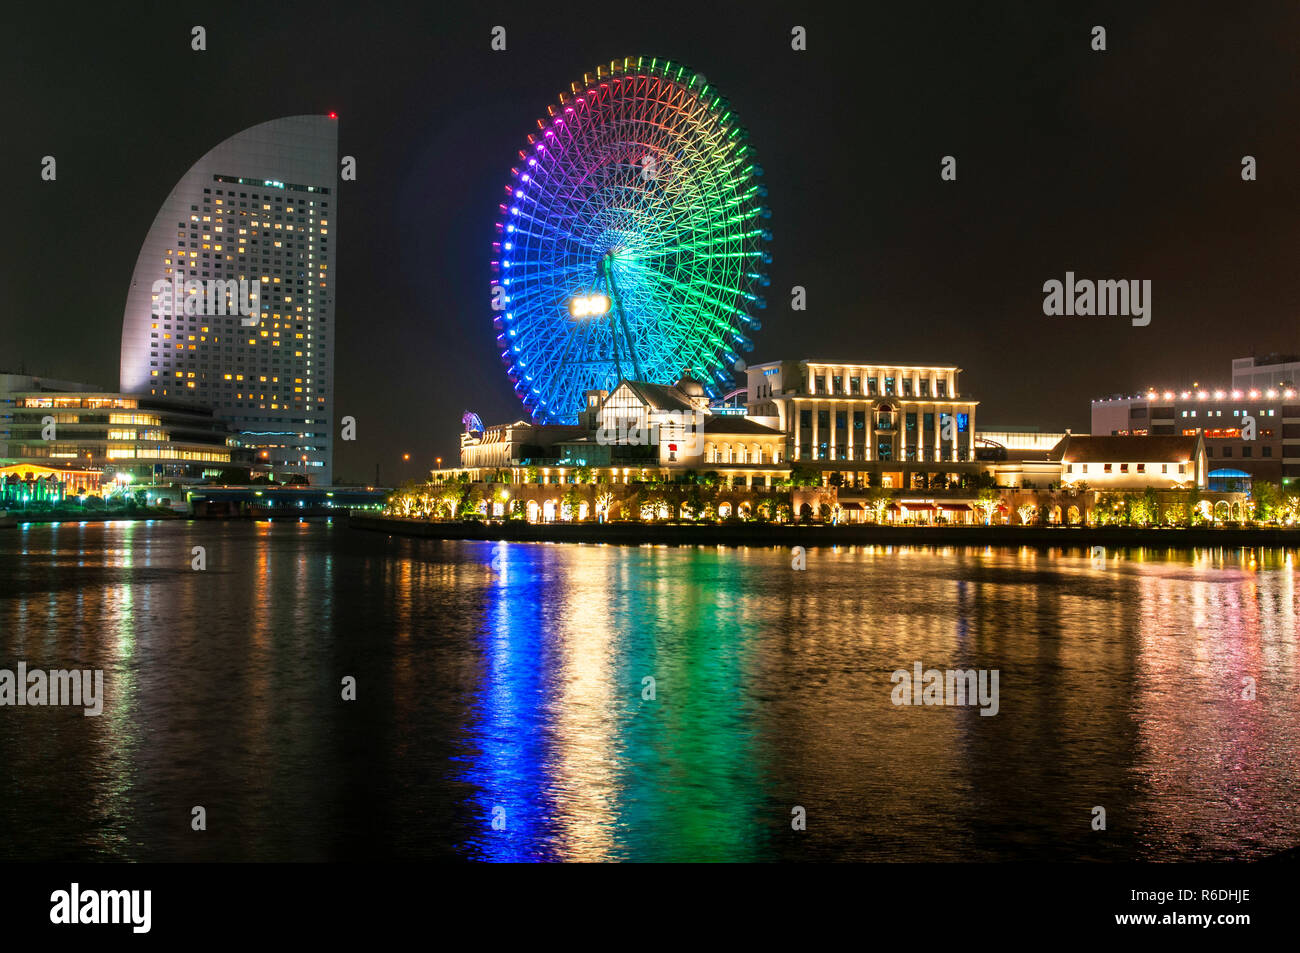 Illuminated Night Scene Of The Shinko Area In The Minato Mirai 21 District Of Yokohama, Japan Including The Cosmo World Amusement Park Stock Photo